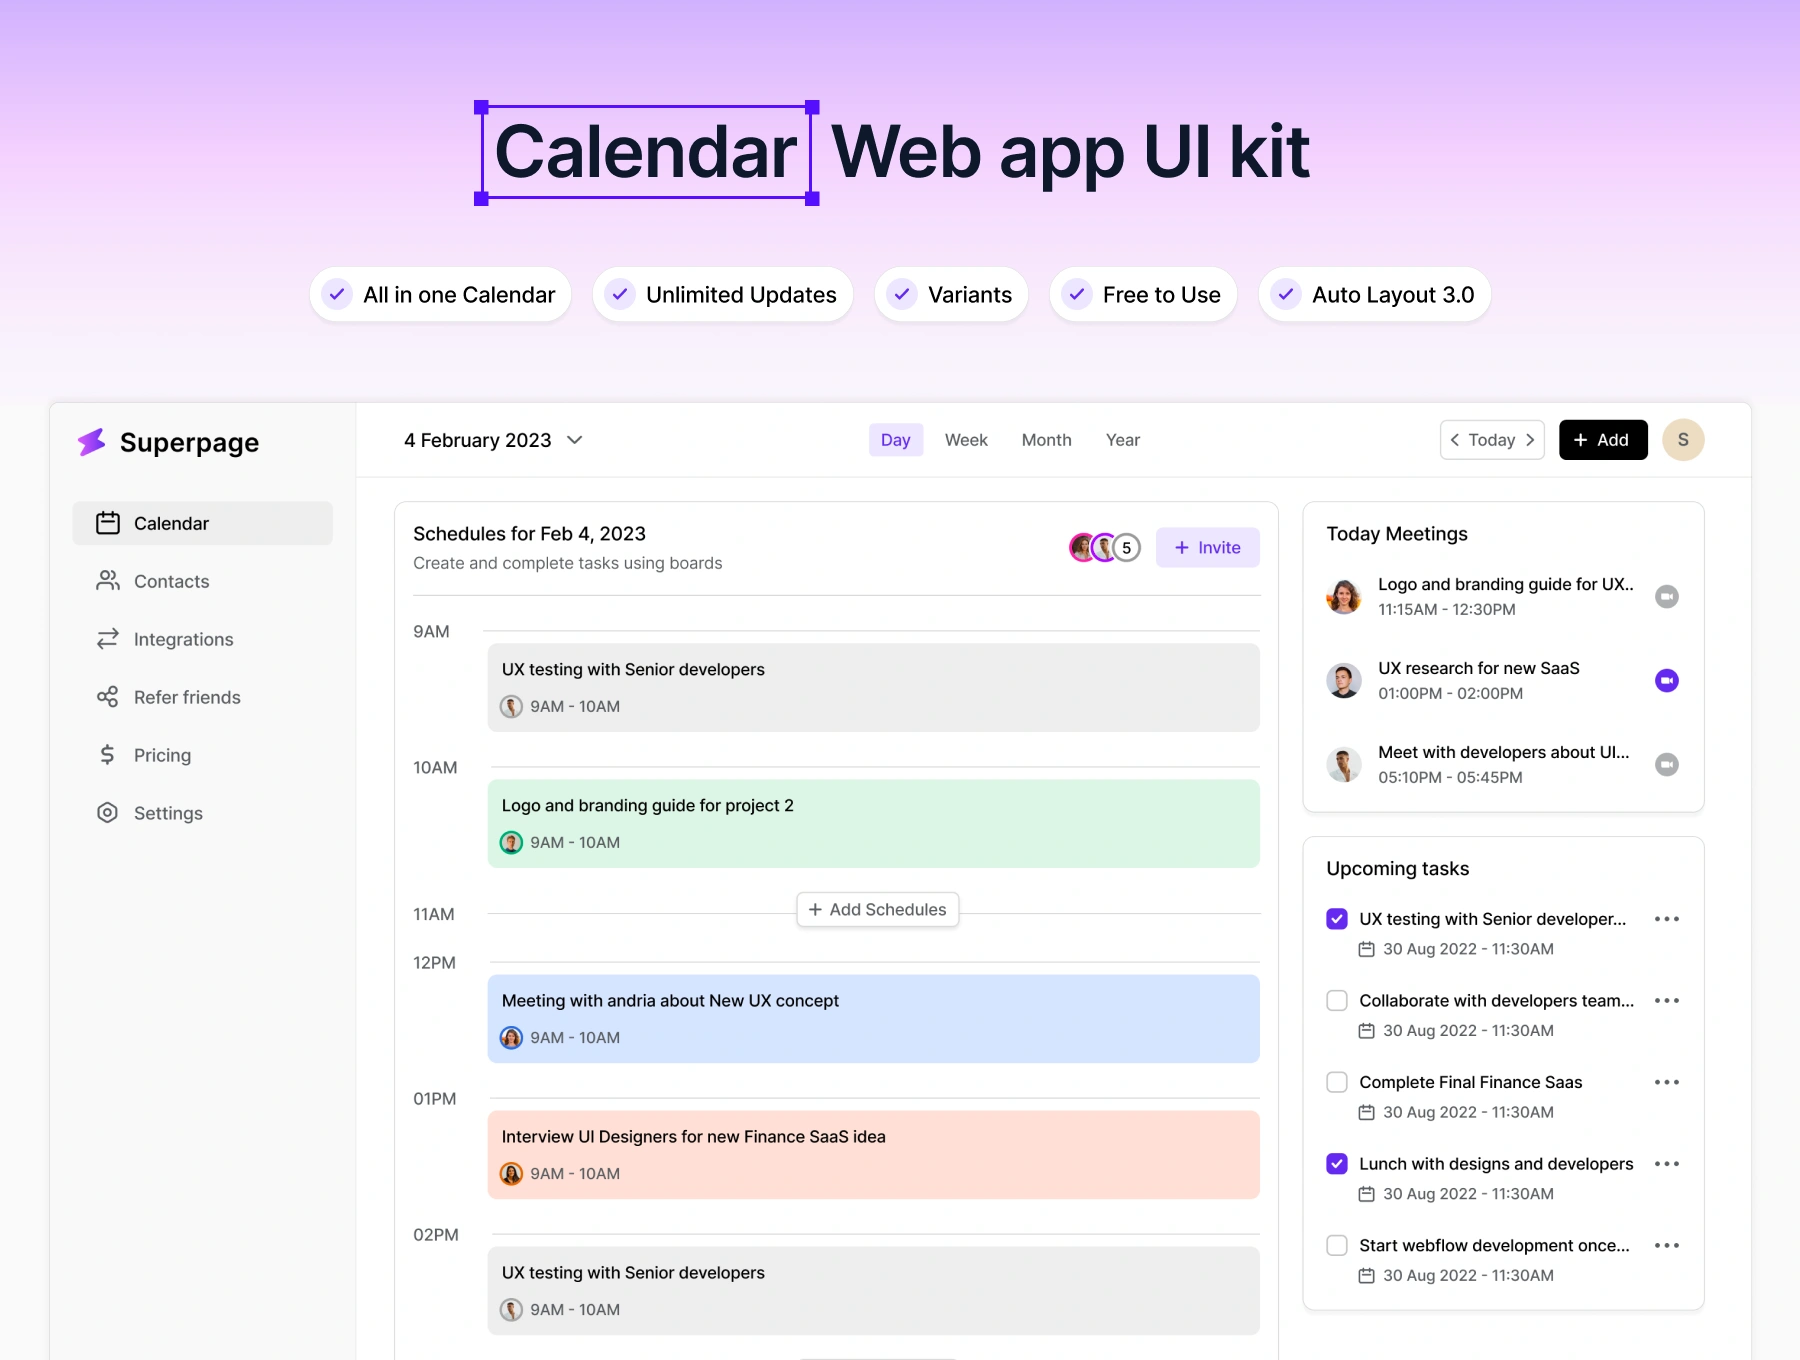 [VIP] Calendar Web app UI kit